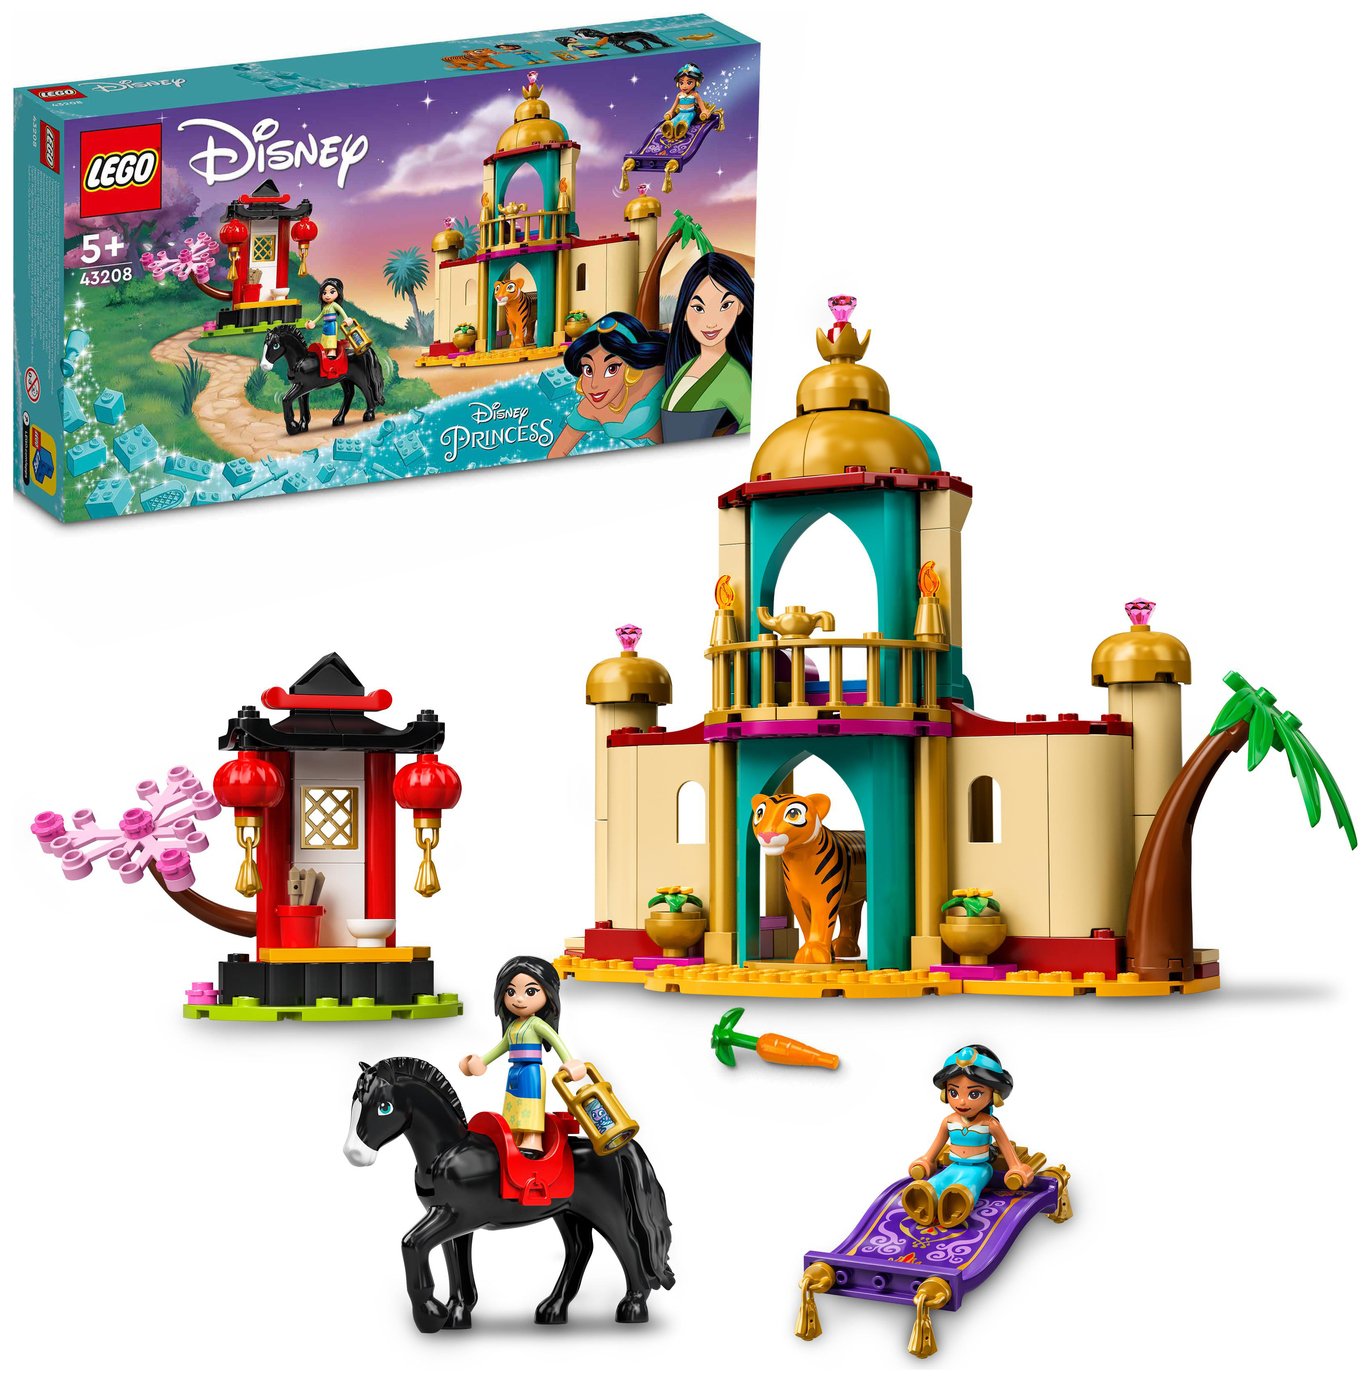 LEGO Disney Princess Jasmine and Mulan's Adventure Set 43208